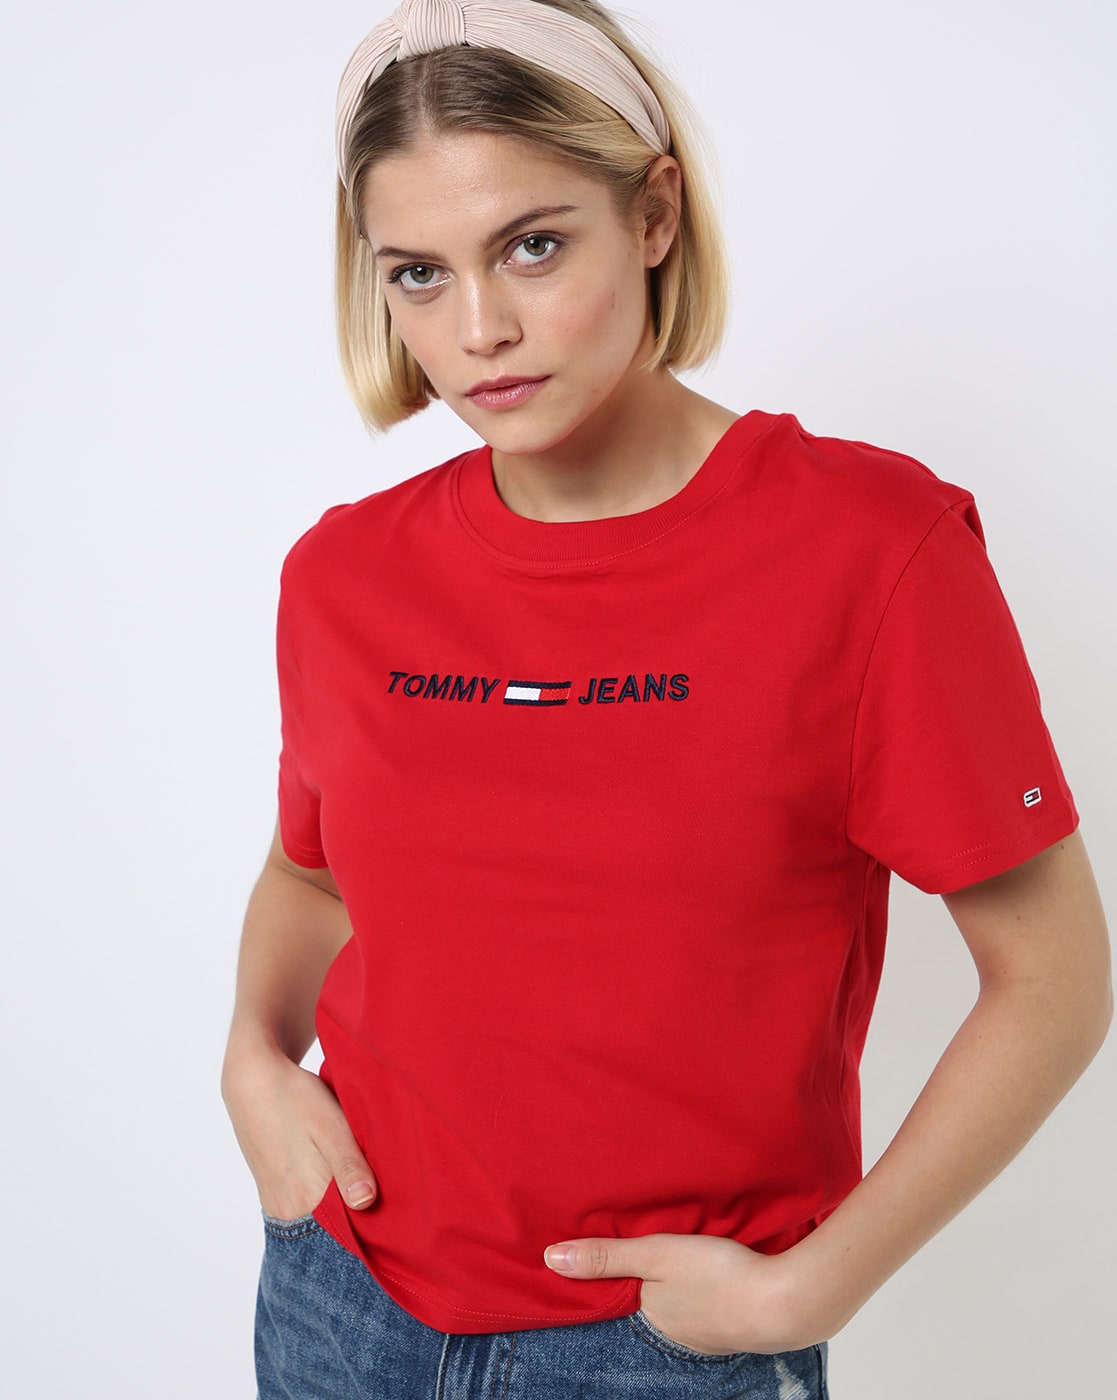 tommy hilfiger red shirt womens Online 